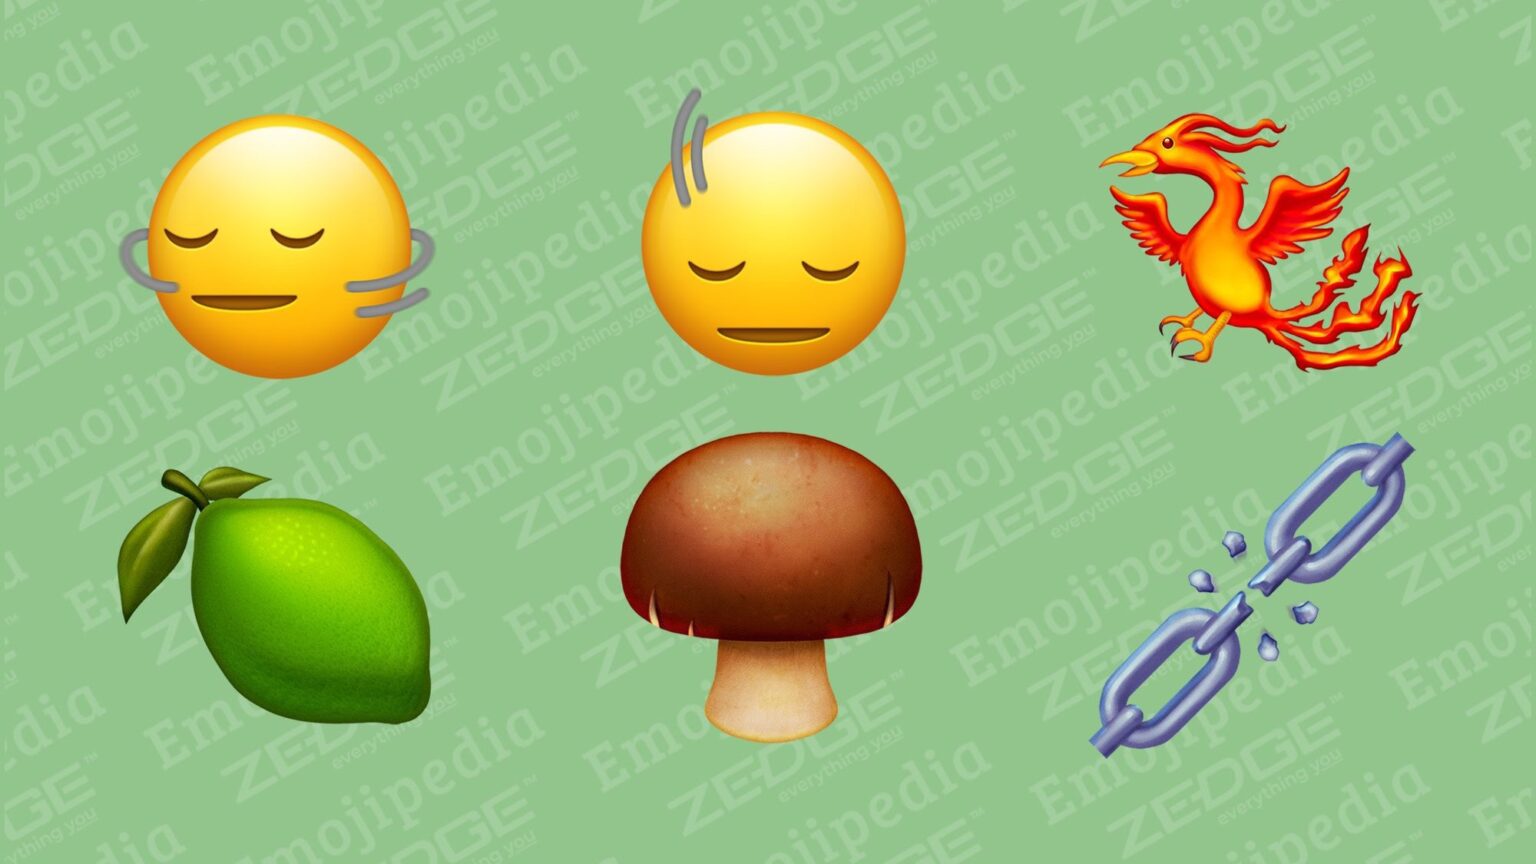 Proposed Emoji 15.1 additions